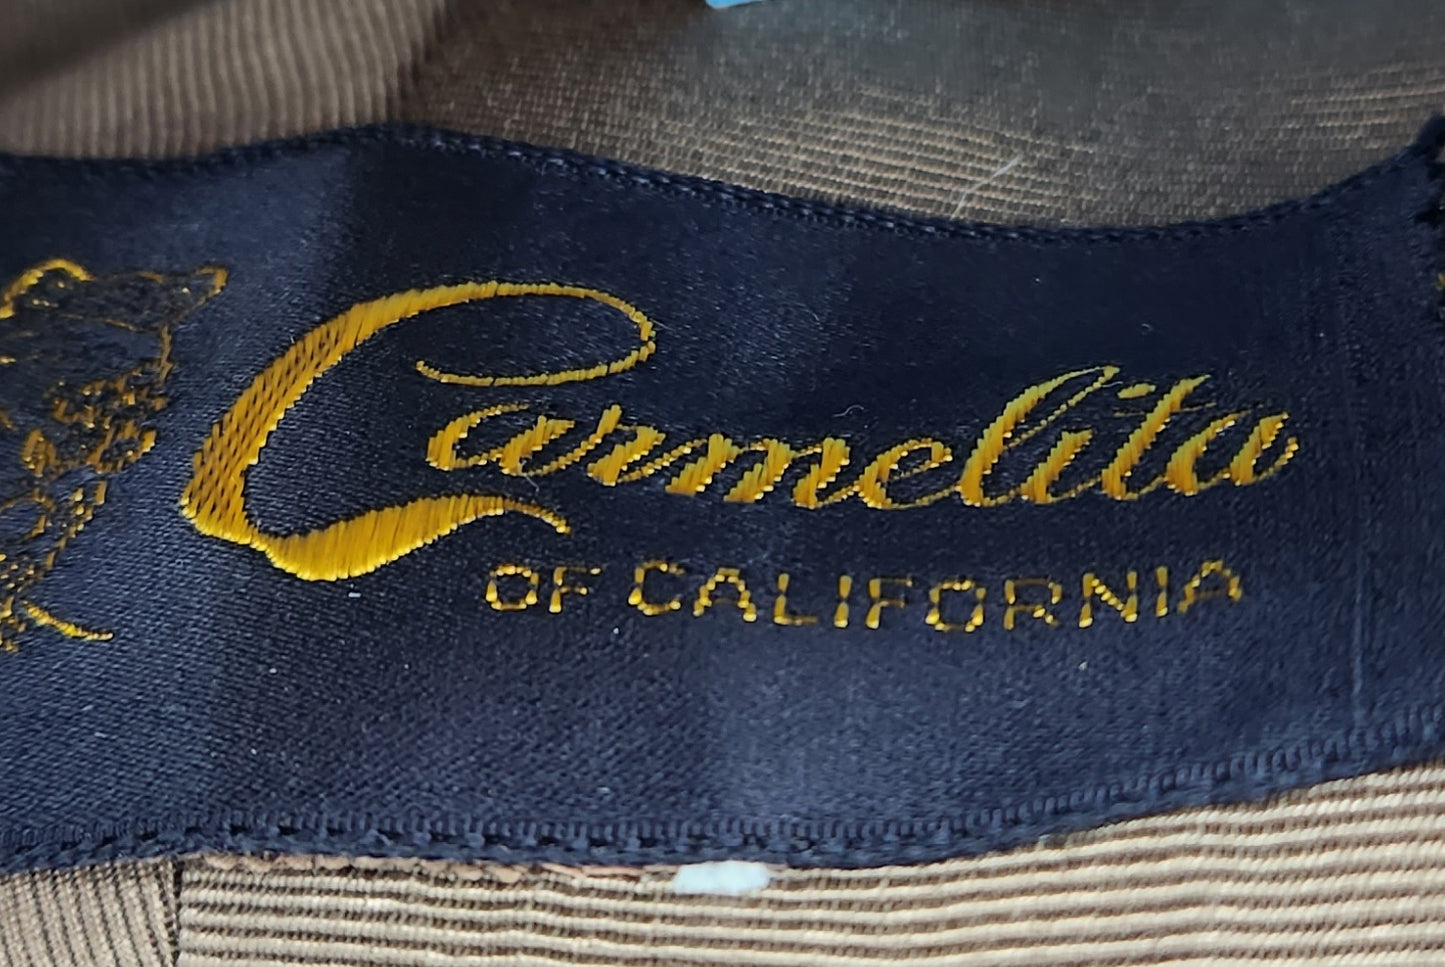 Carmelita of California Leopard Print Hat